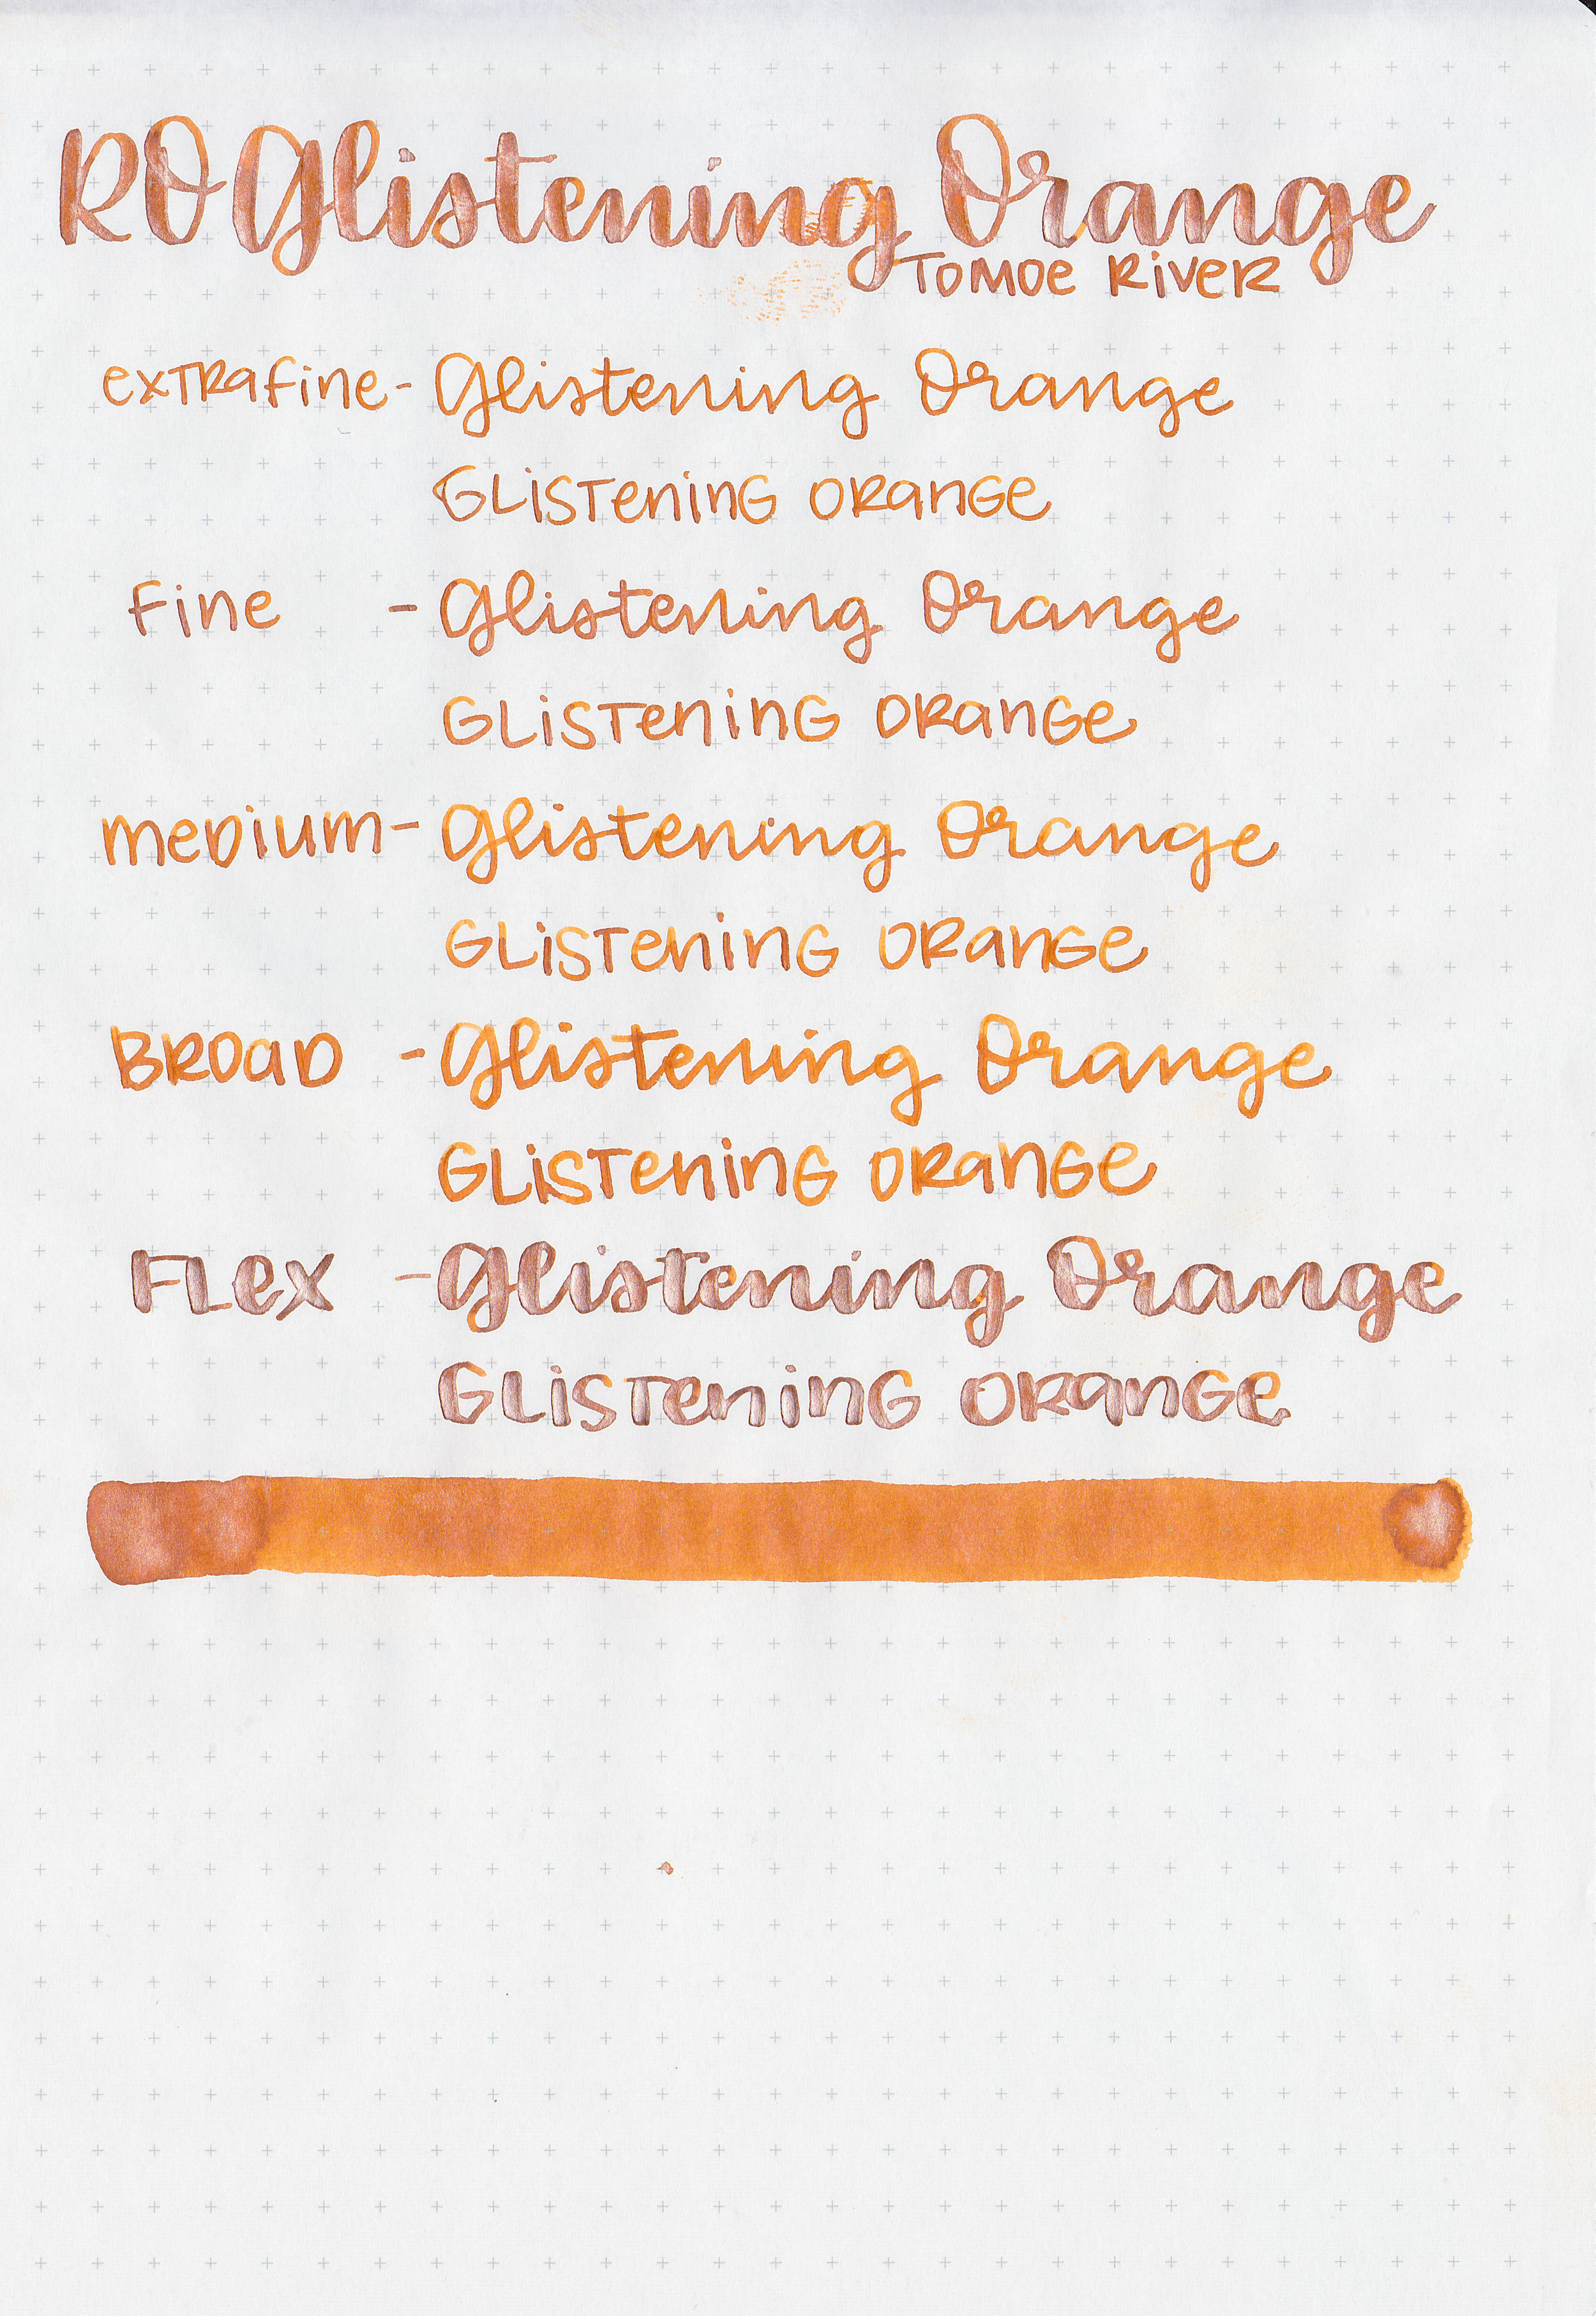 ro-glistening-orange-rumble-10.jpg